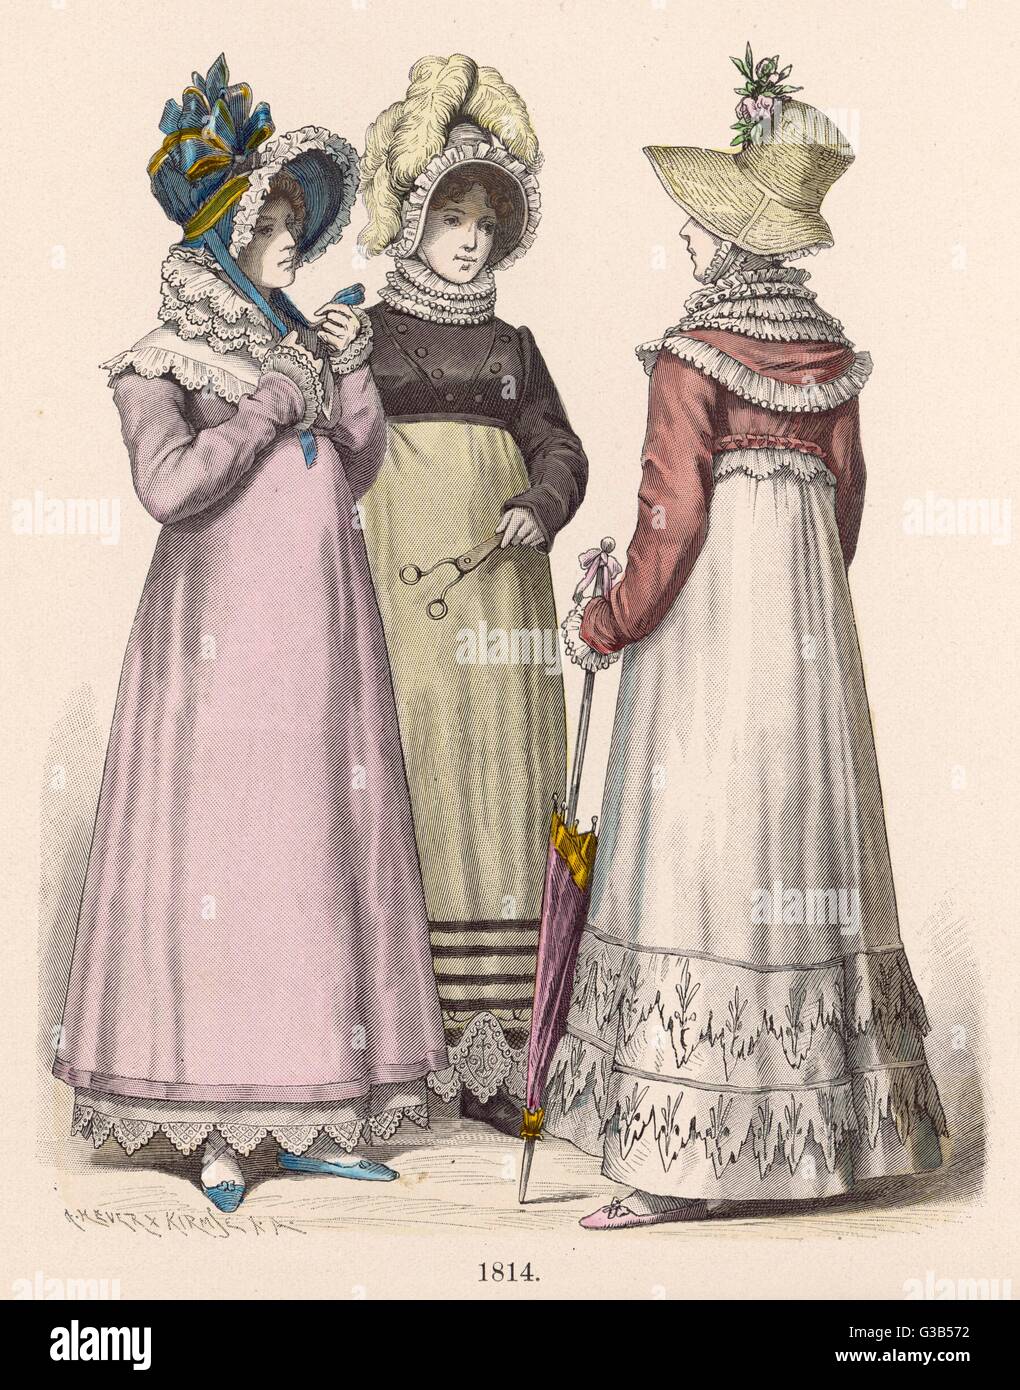 Fashions of 1814 Stock Photo